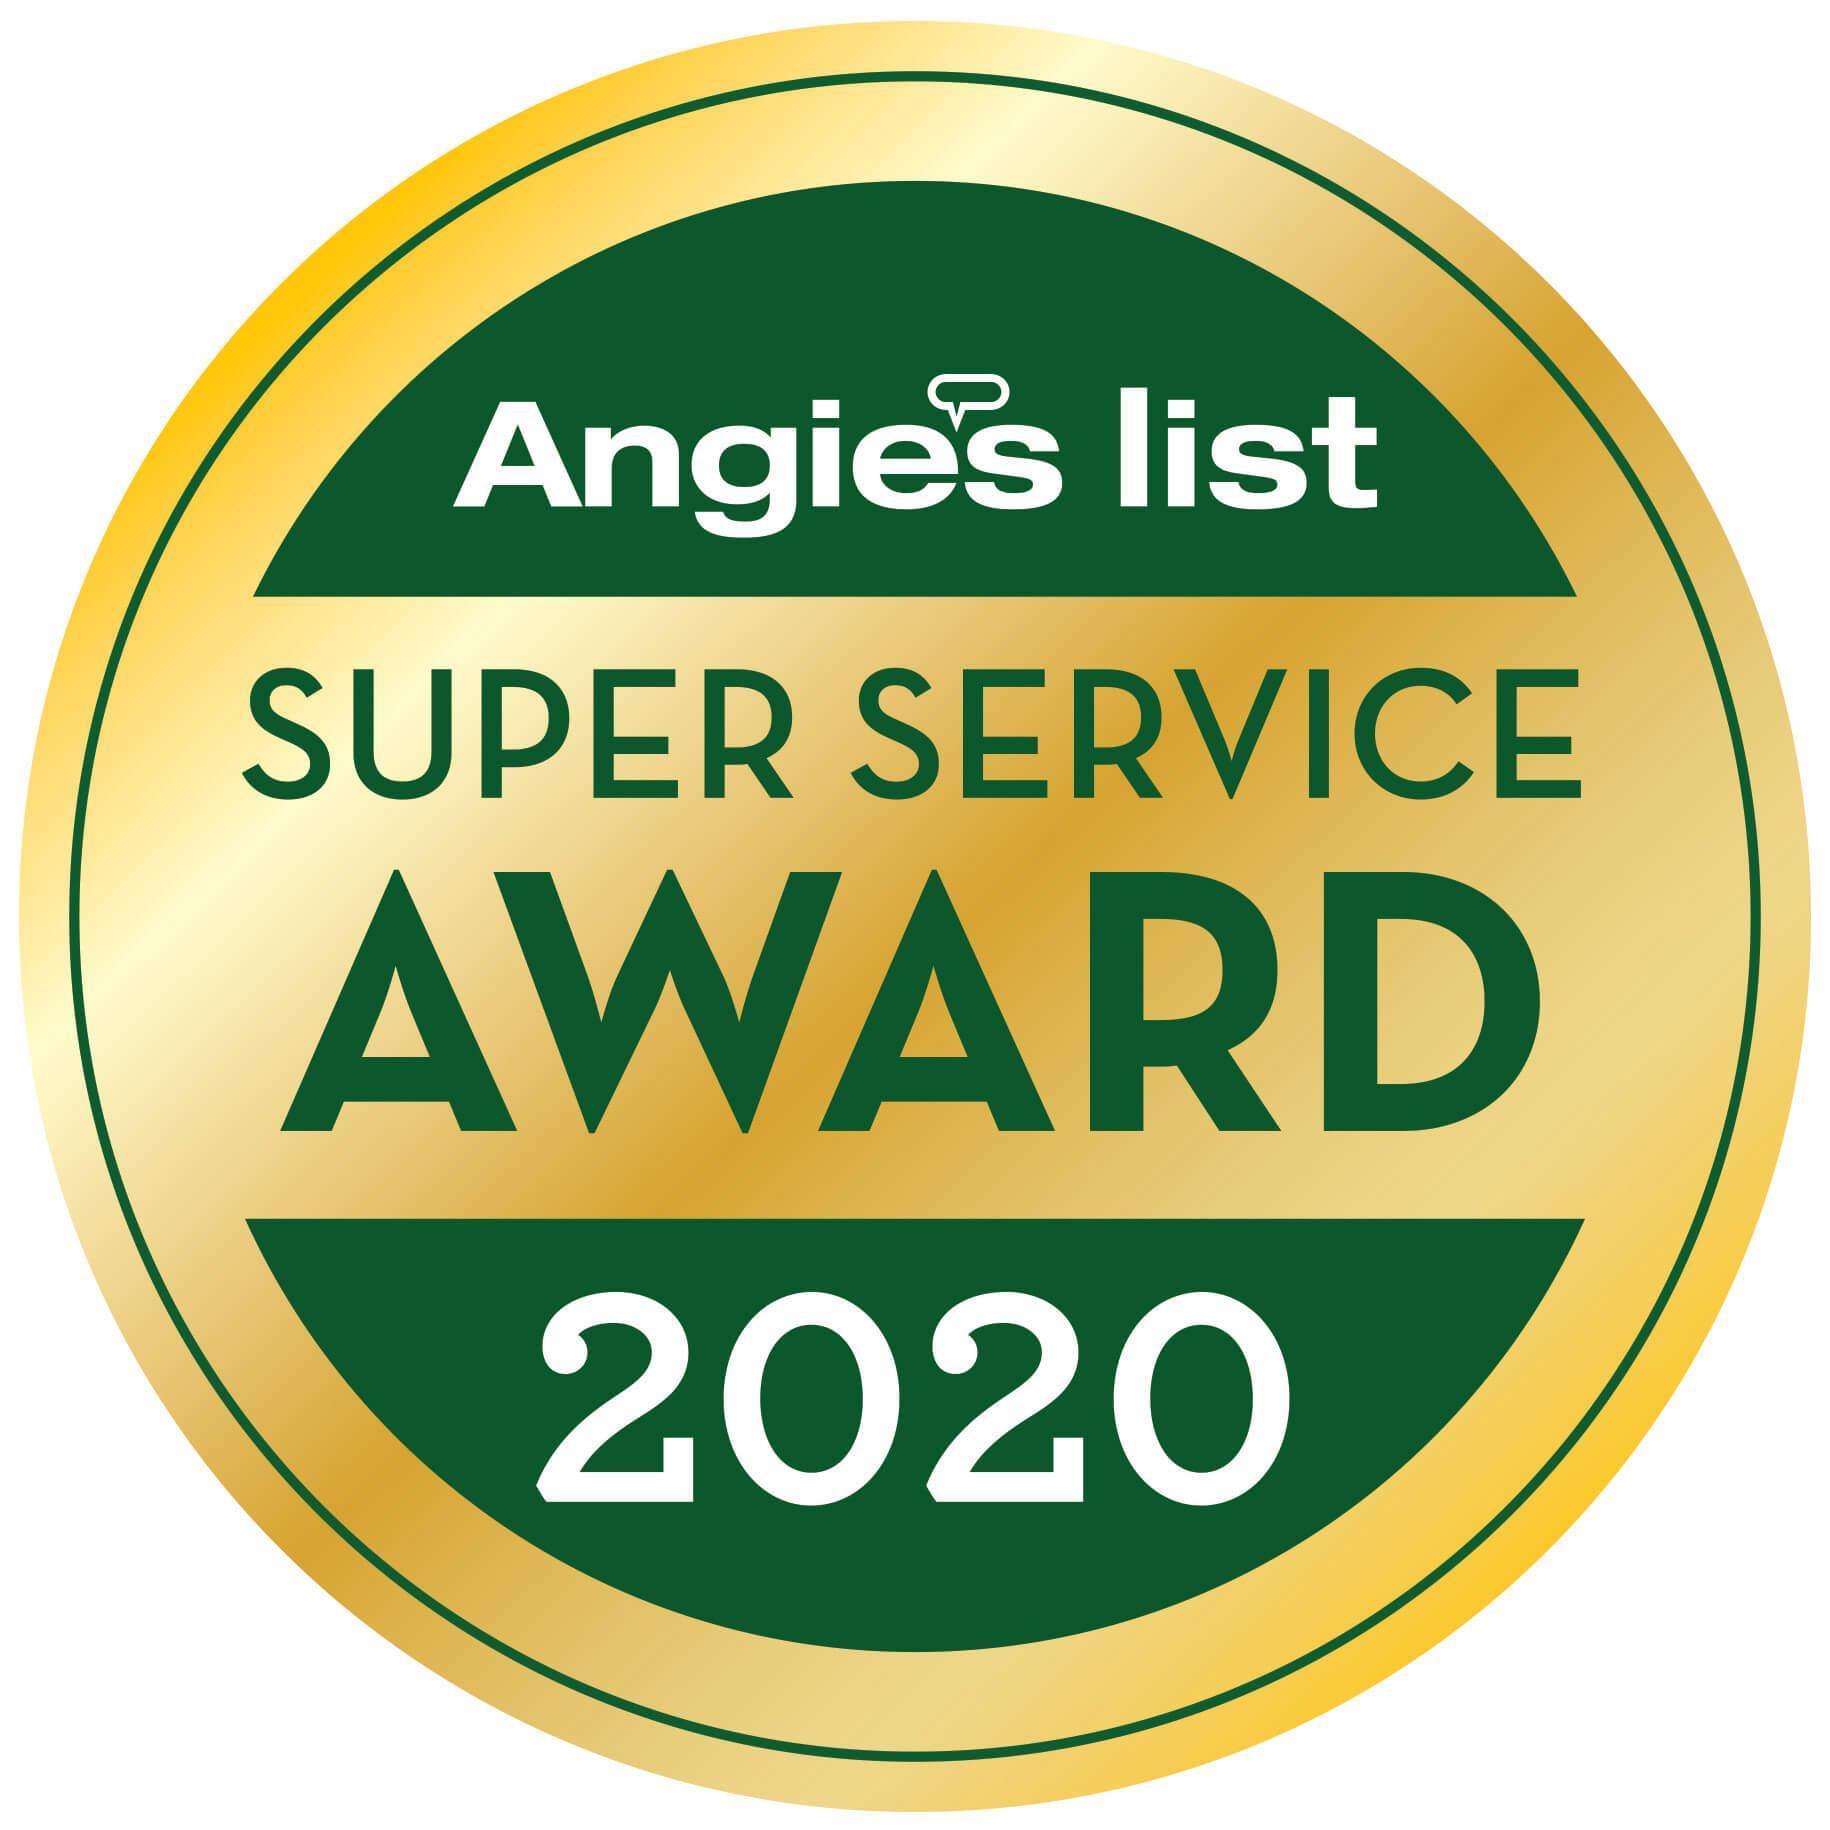 angies-list-super-service-award-winner-in-Orrville